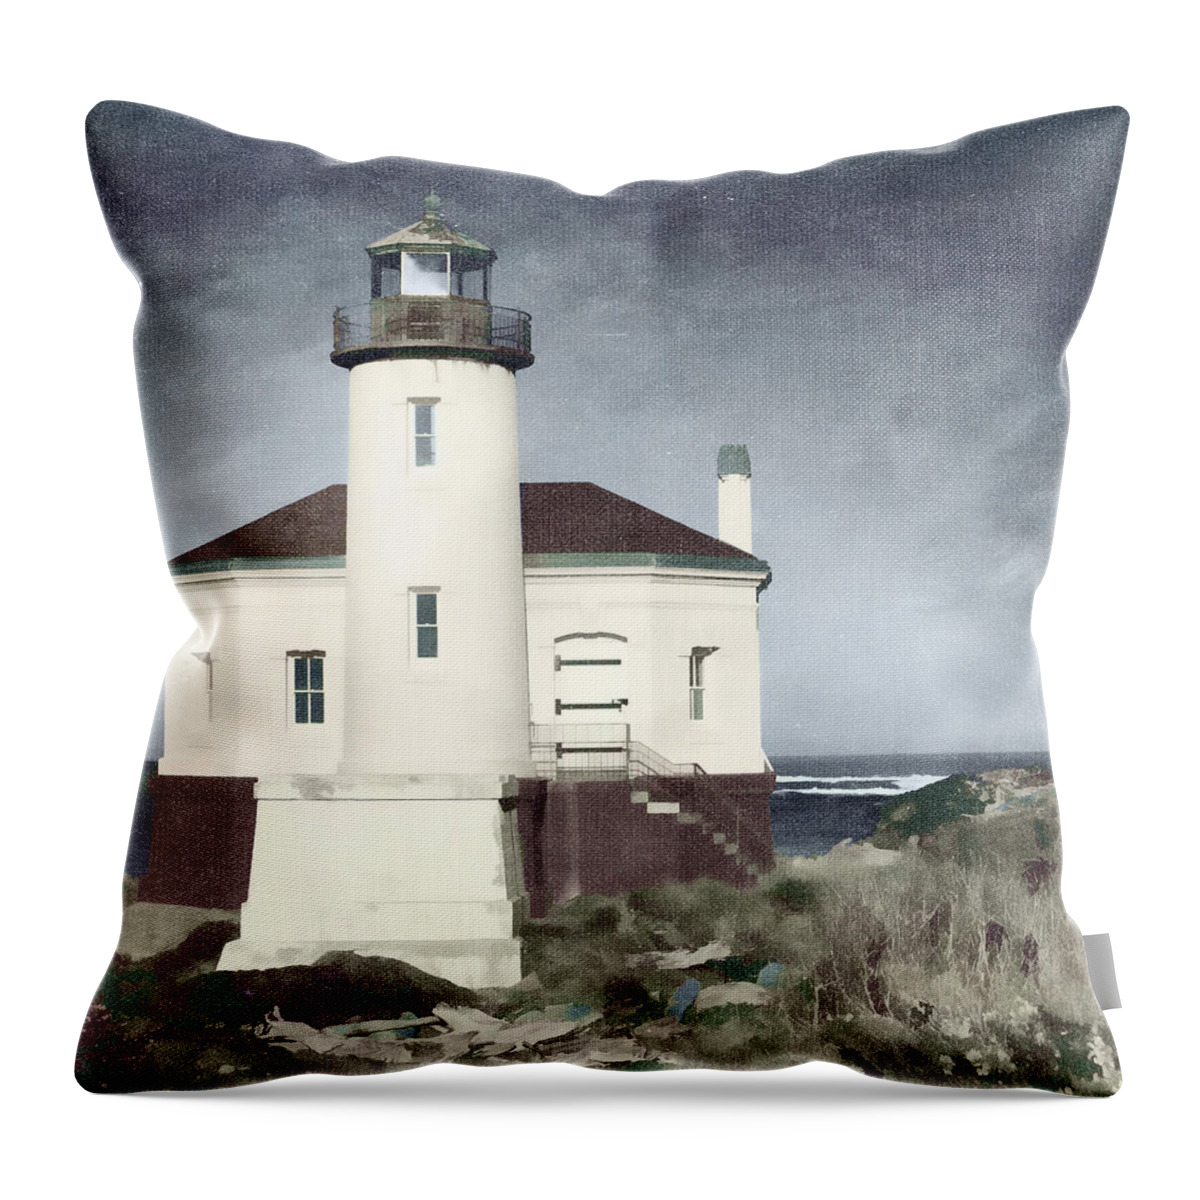 Bandon Throw Pillow featuring the photograph Bandon Lighthouse by Carol Leigh